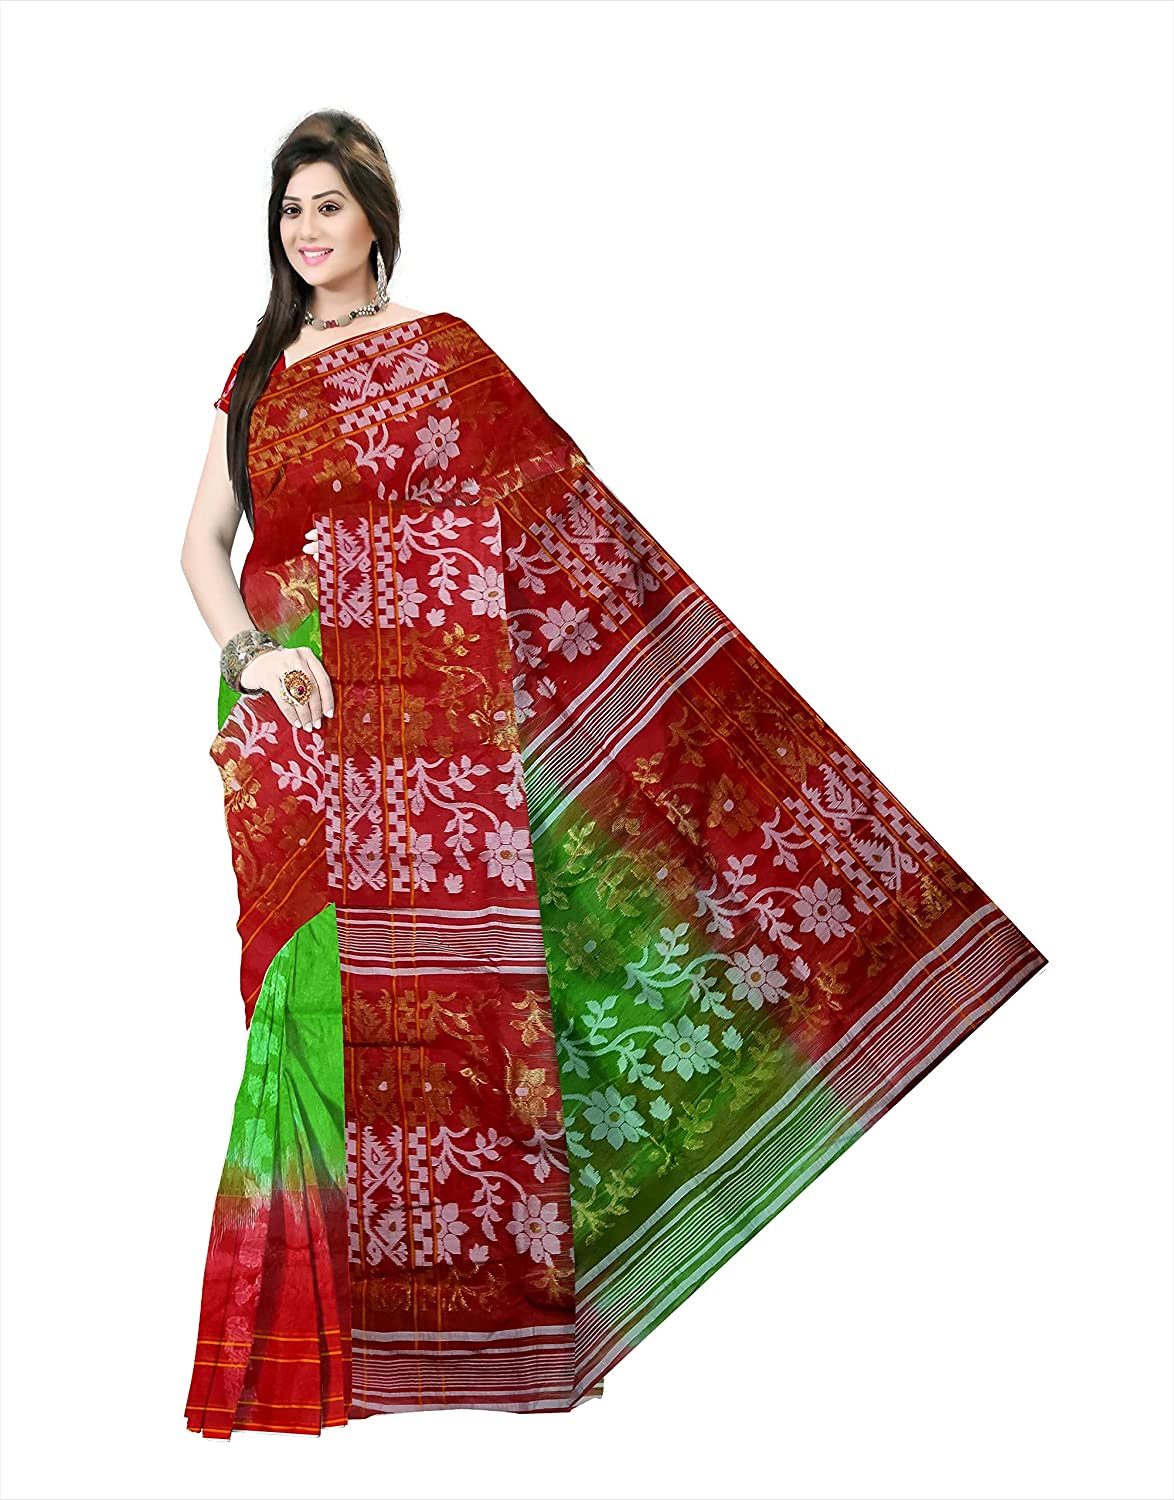 Pradip Fabrics Ethnic Women's Cotton Tant Gap Jamdani Red and Green Color Saree